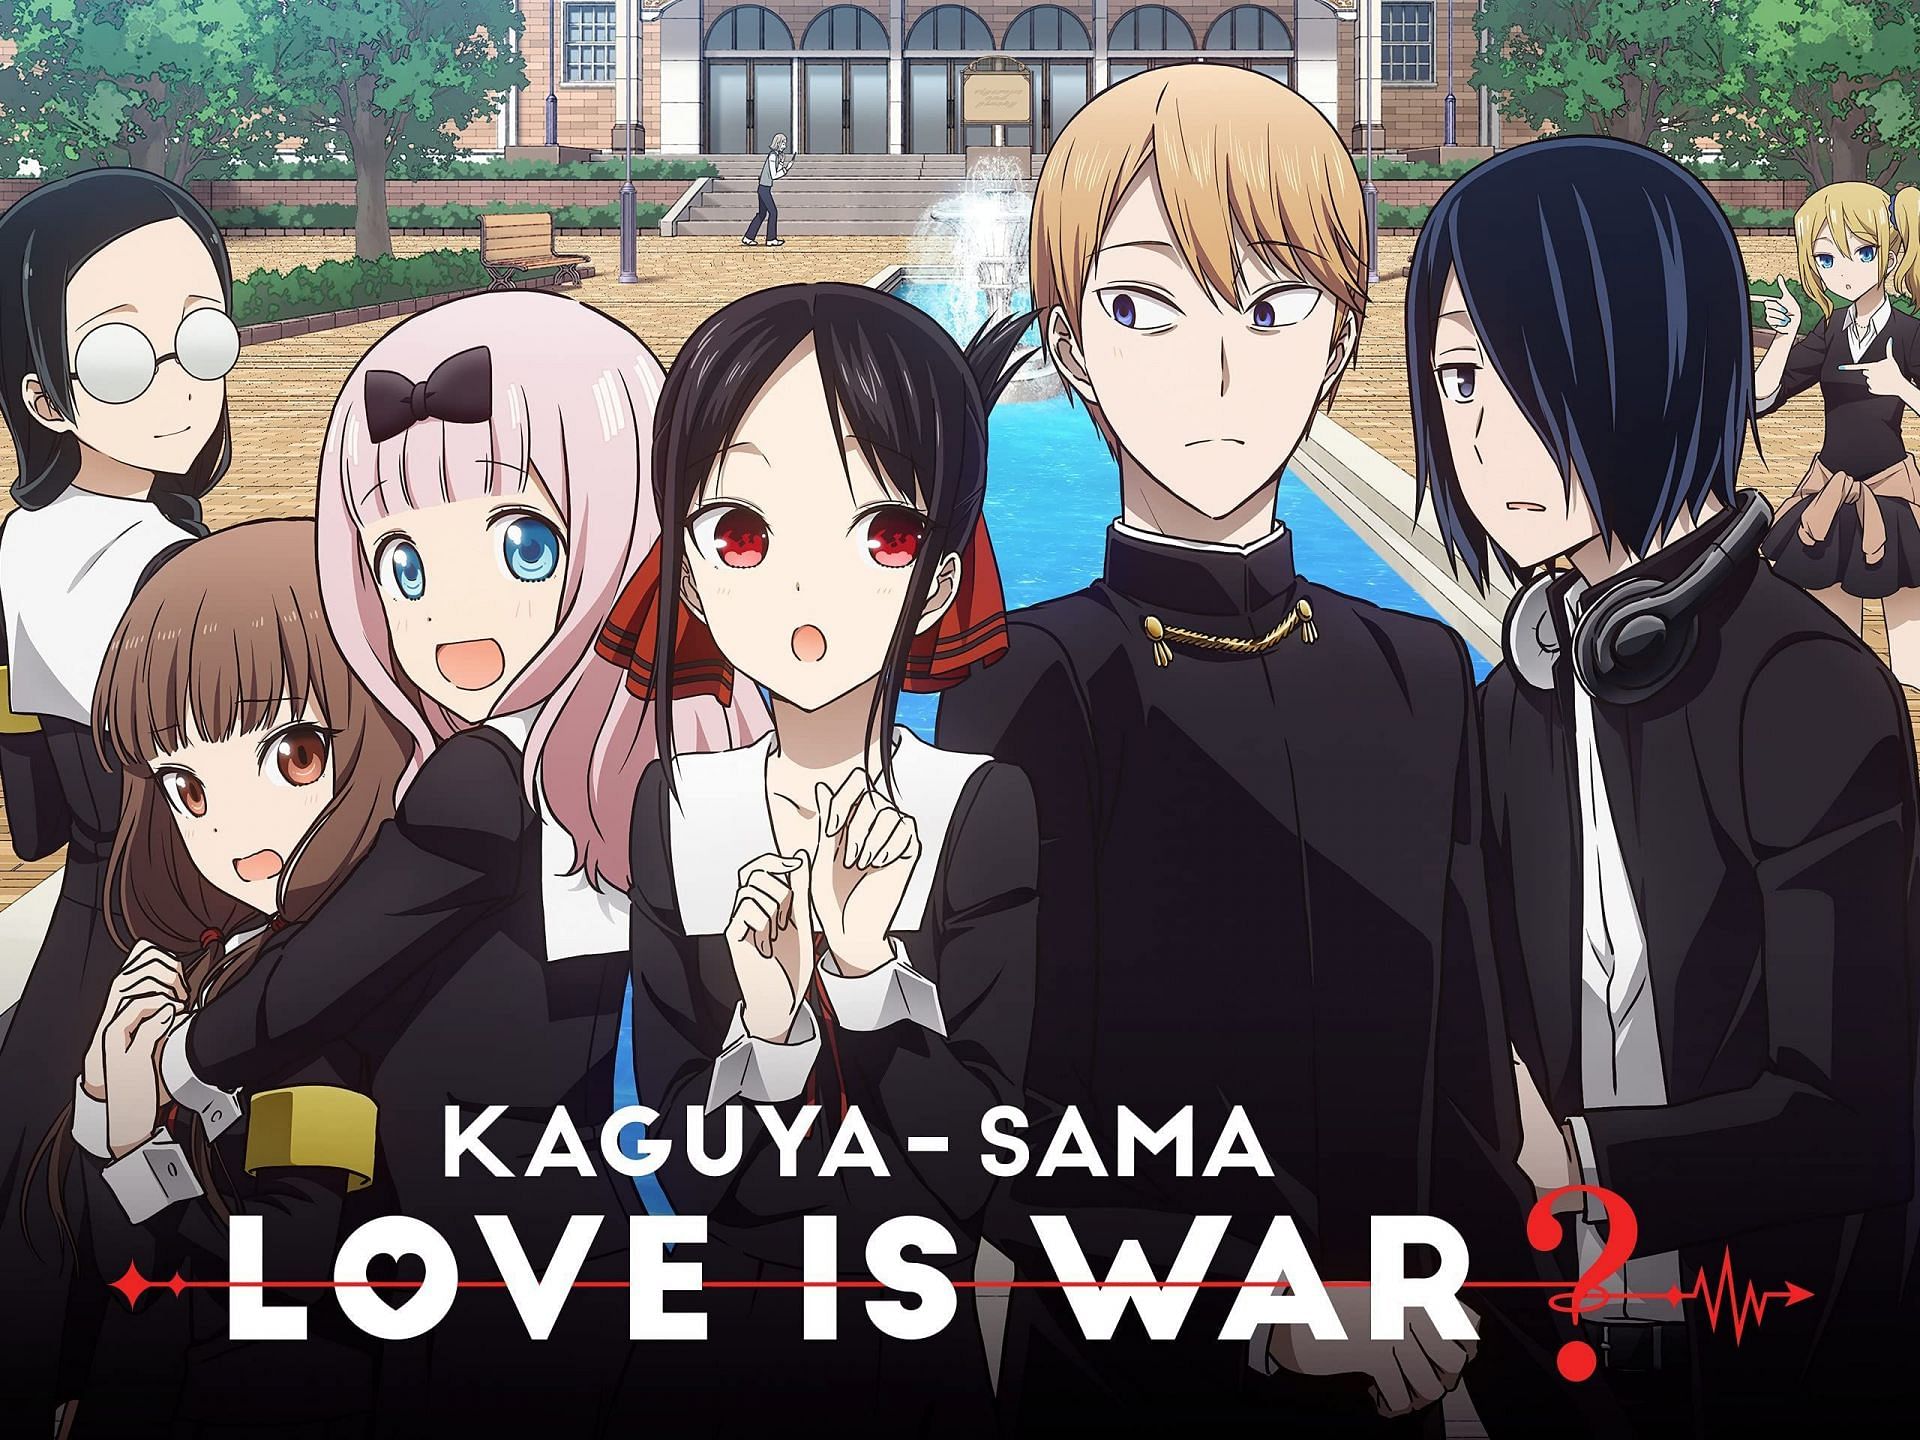 Kaguya-sama: Love is War Anime (image via A-1 Pictures)